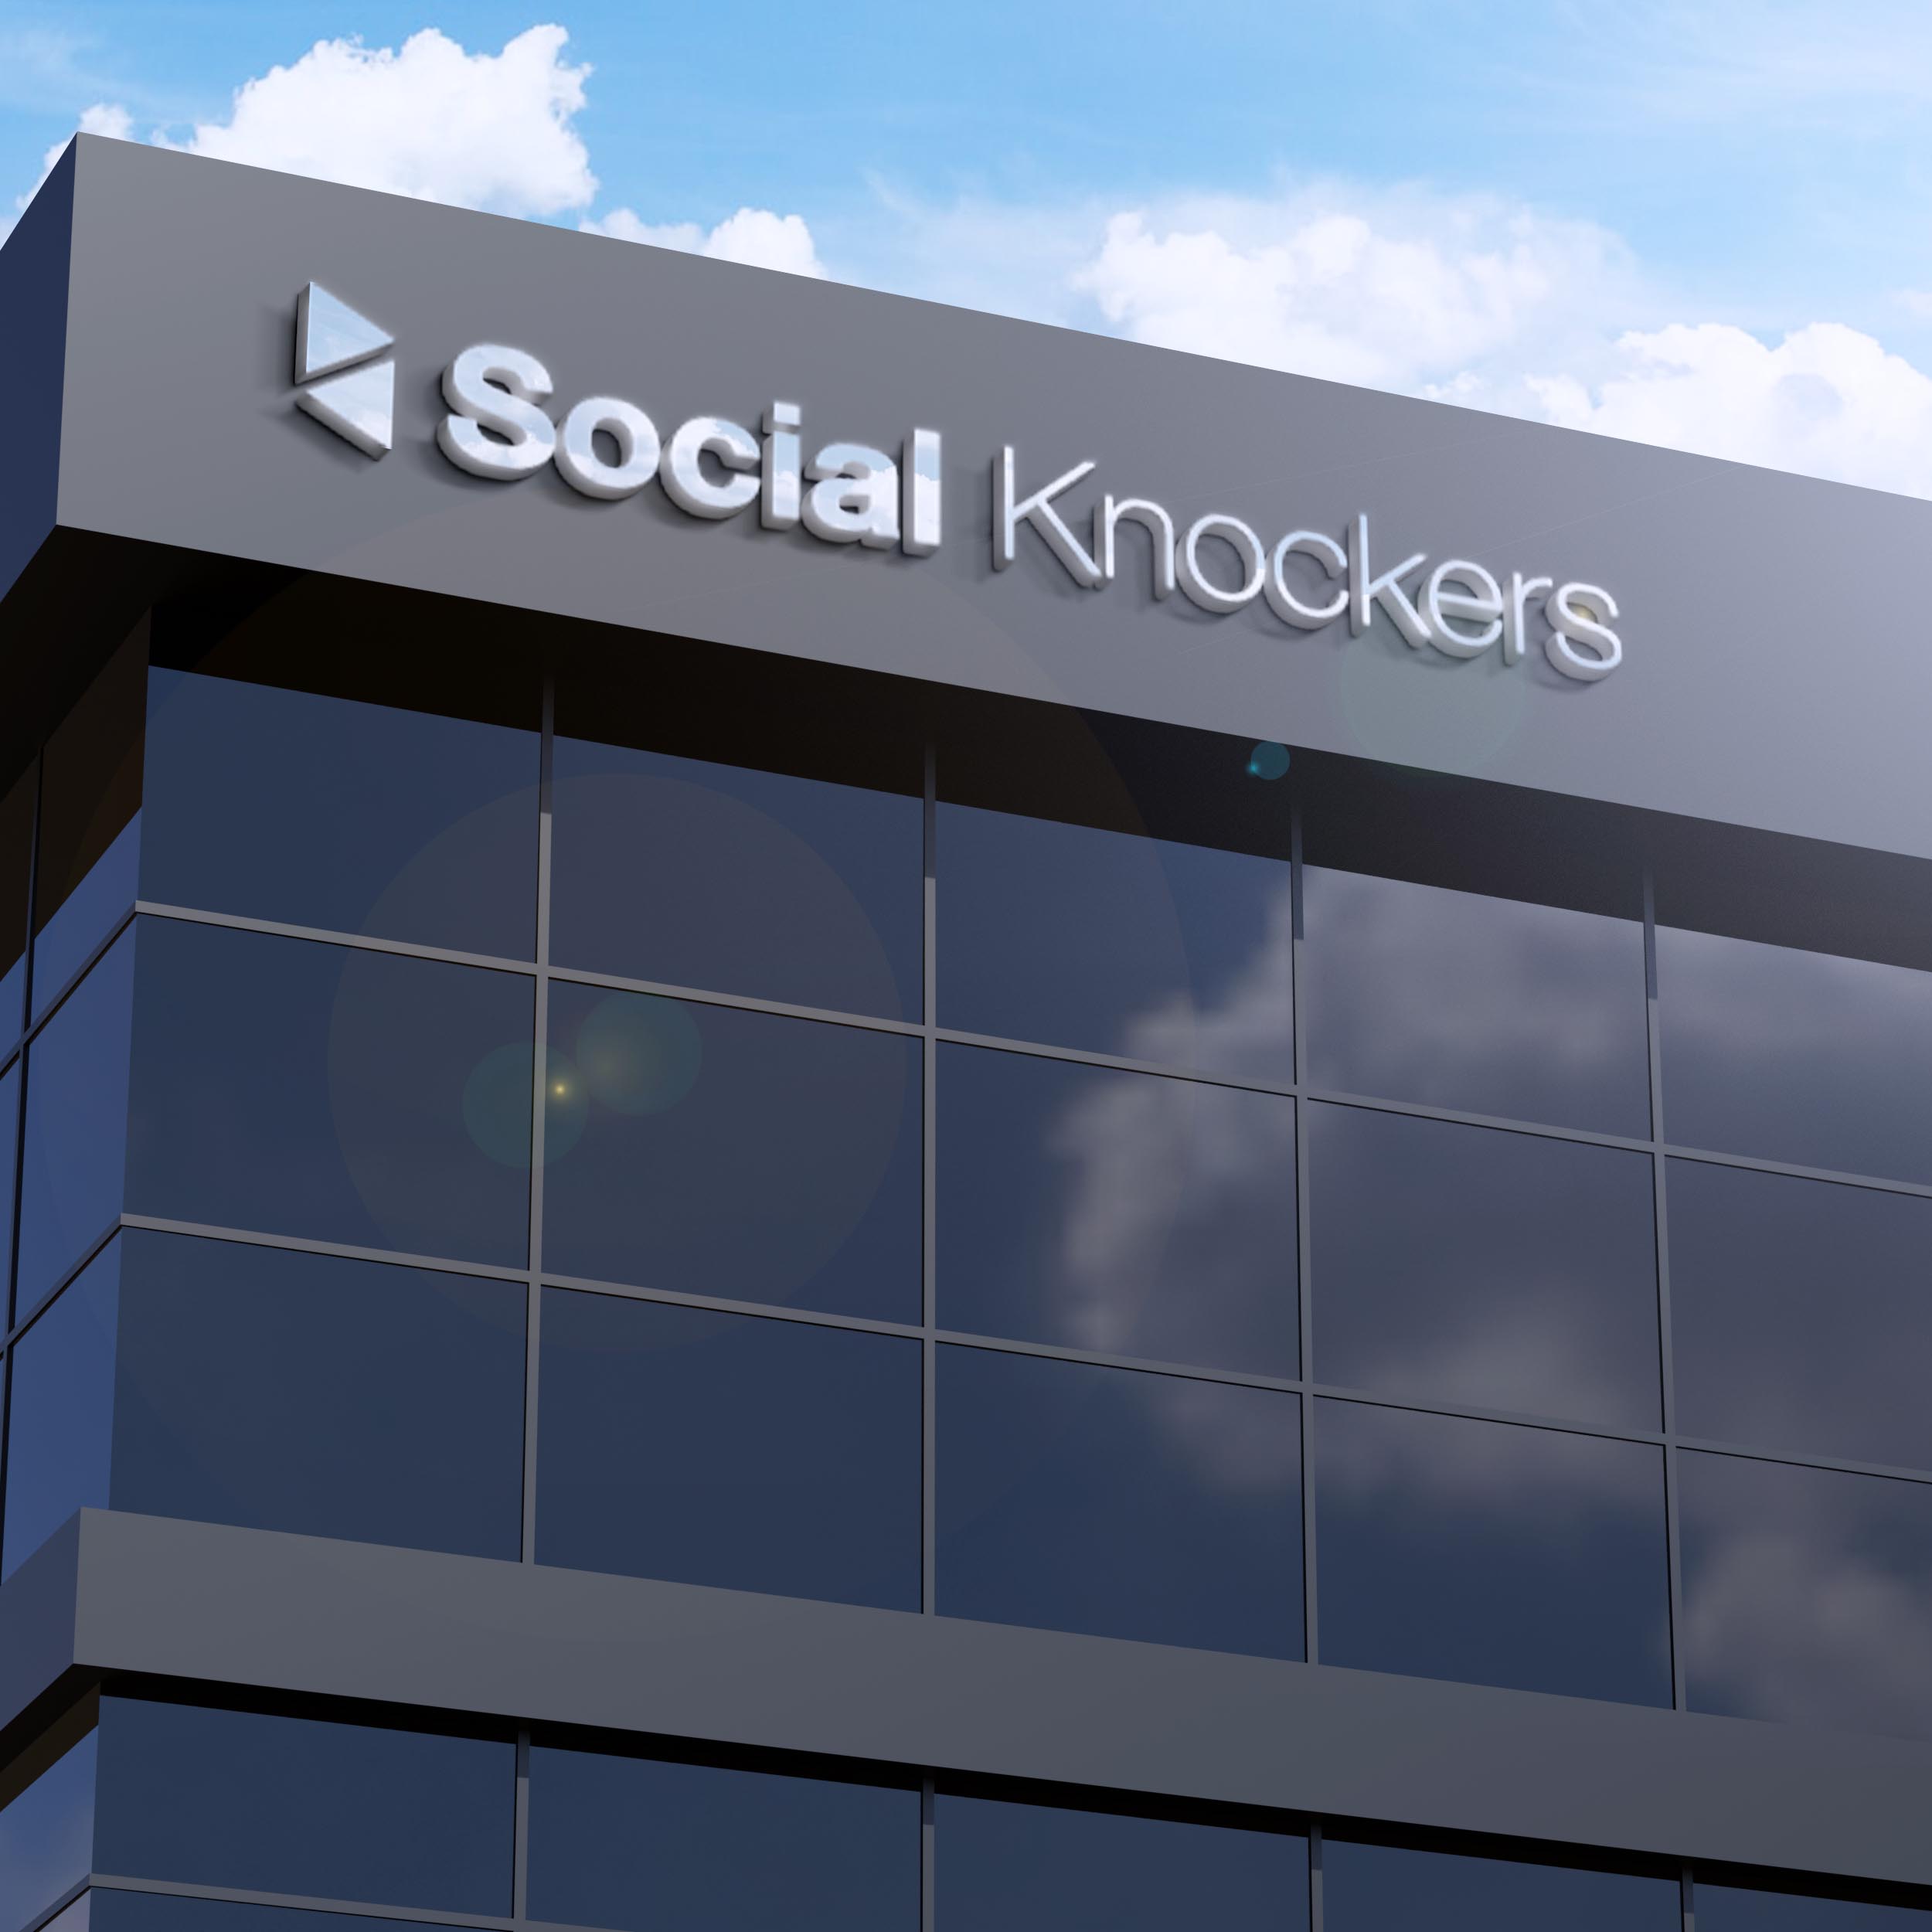 Social Knockers office Address